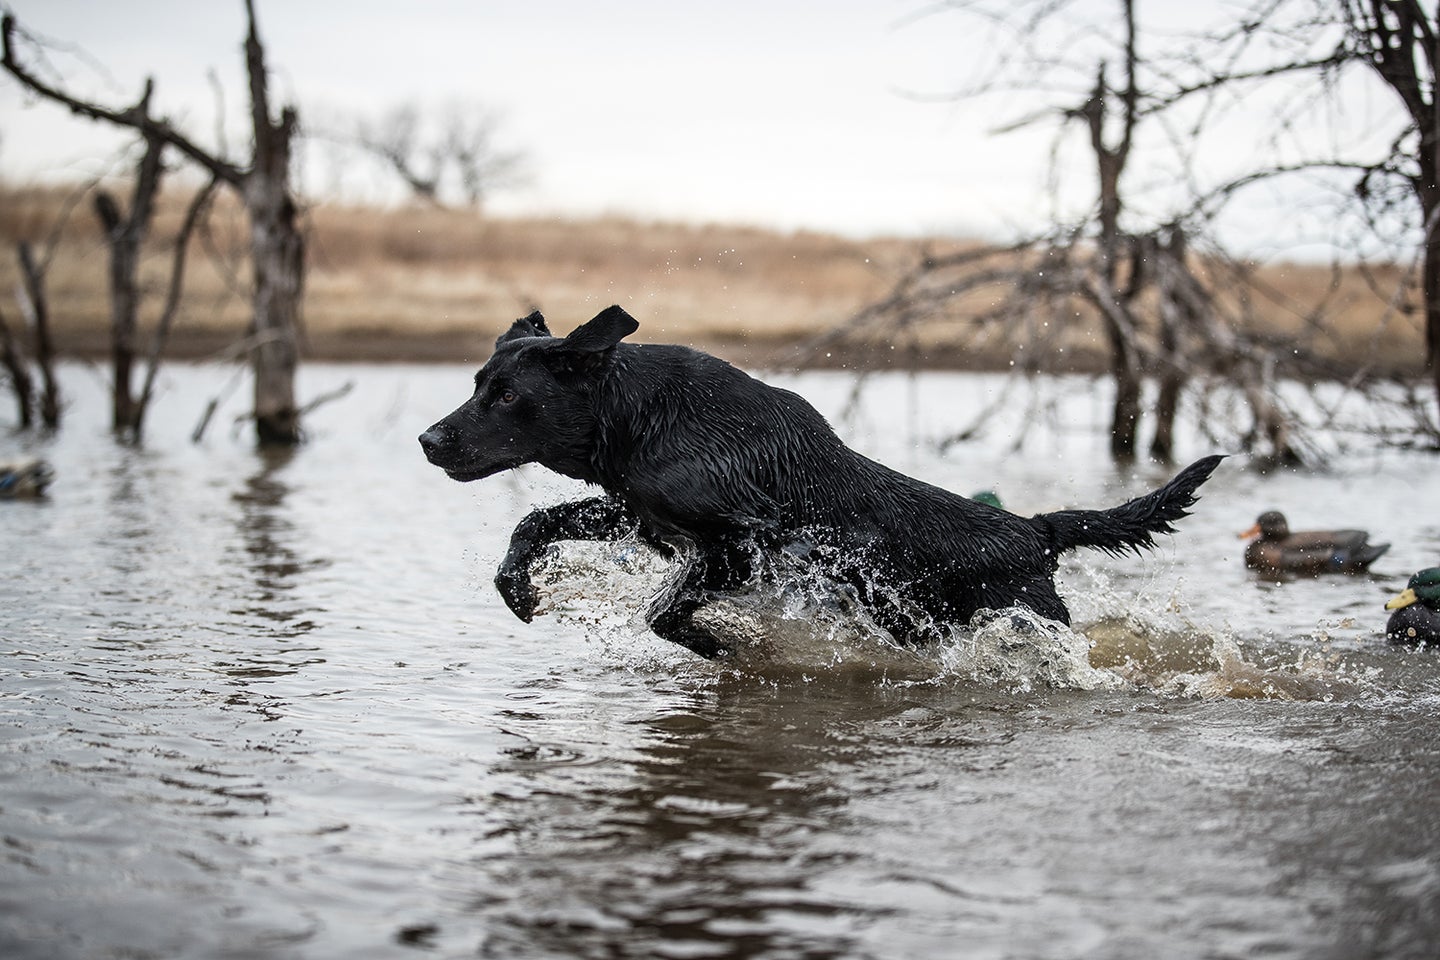 A hunting dog splashing through the water on a retrieve.